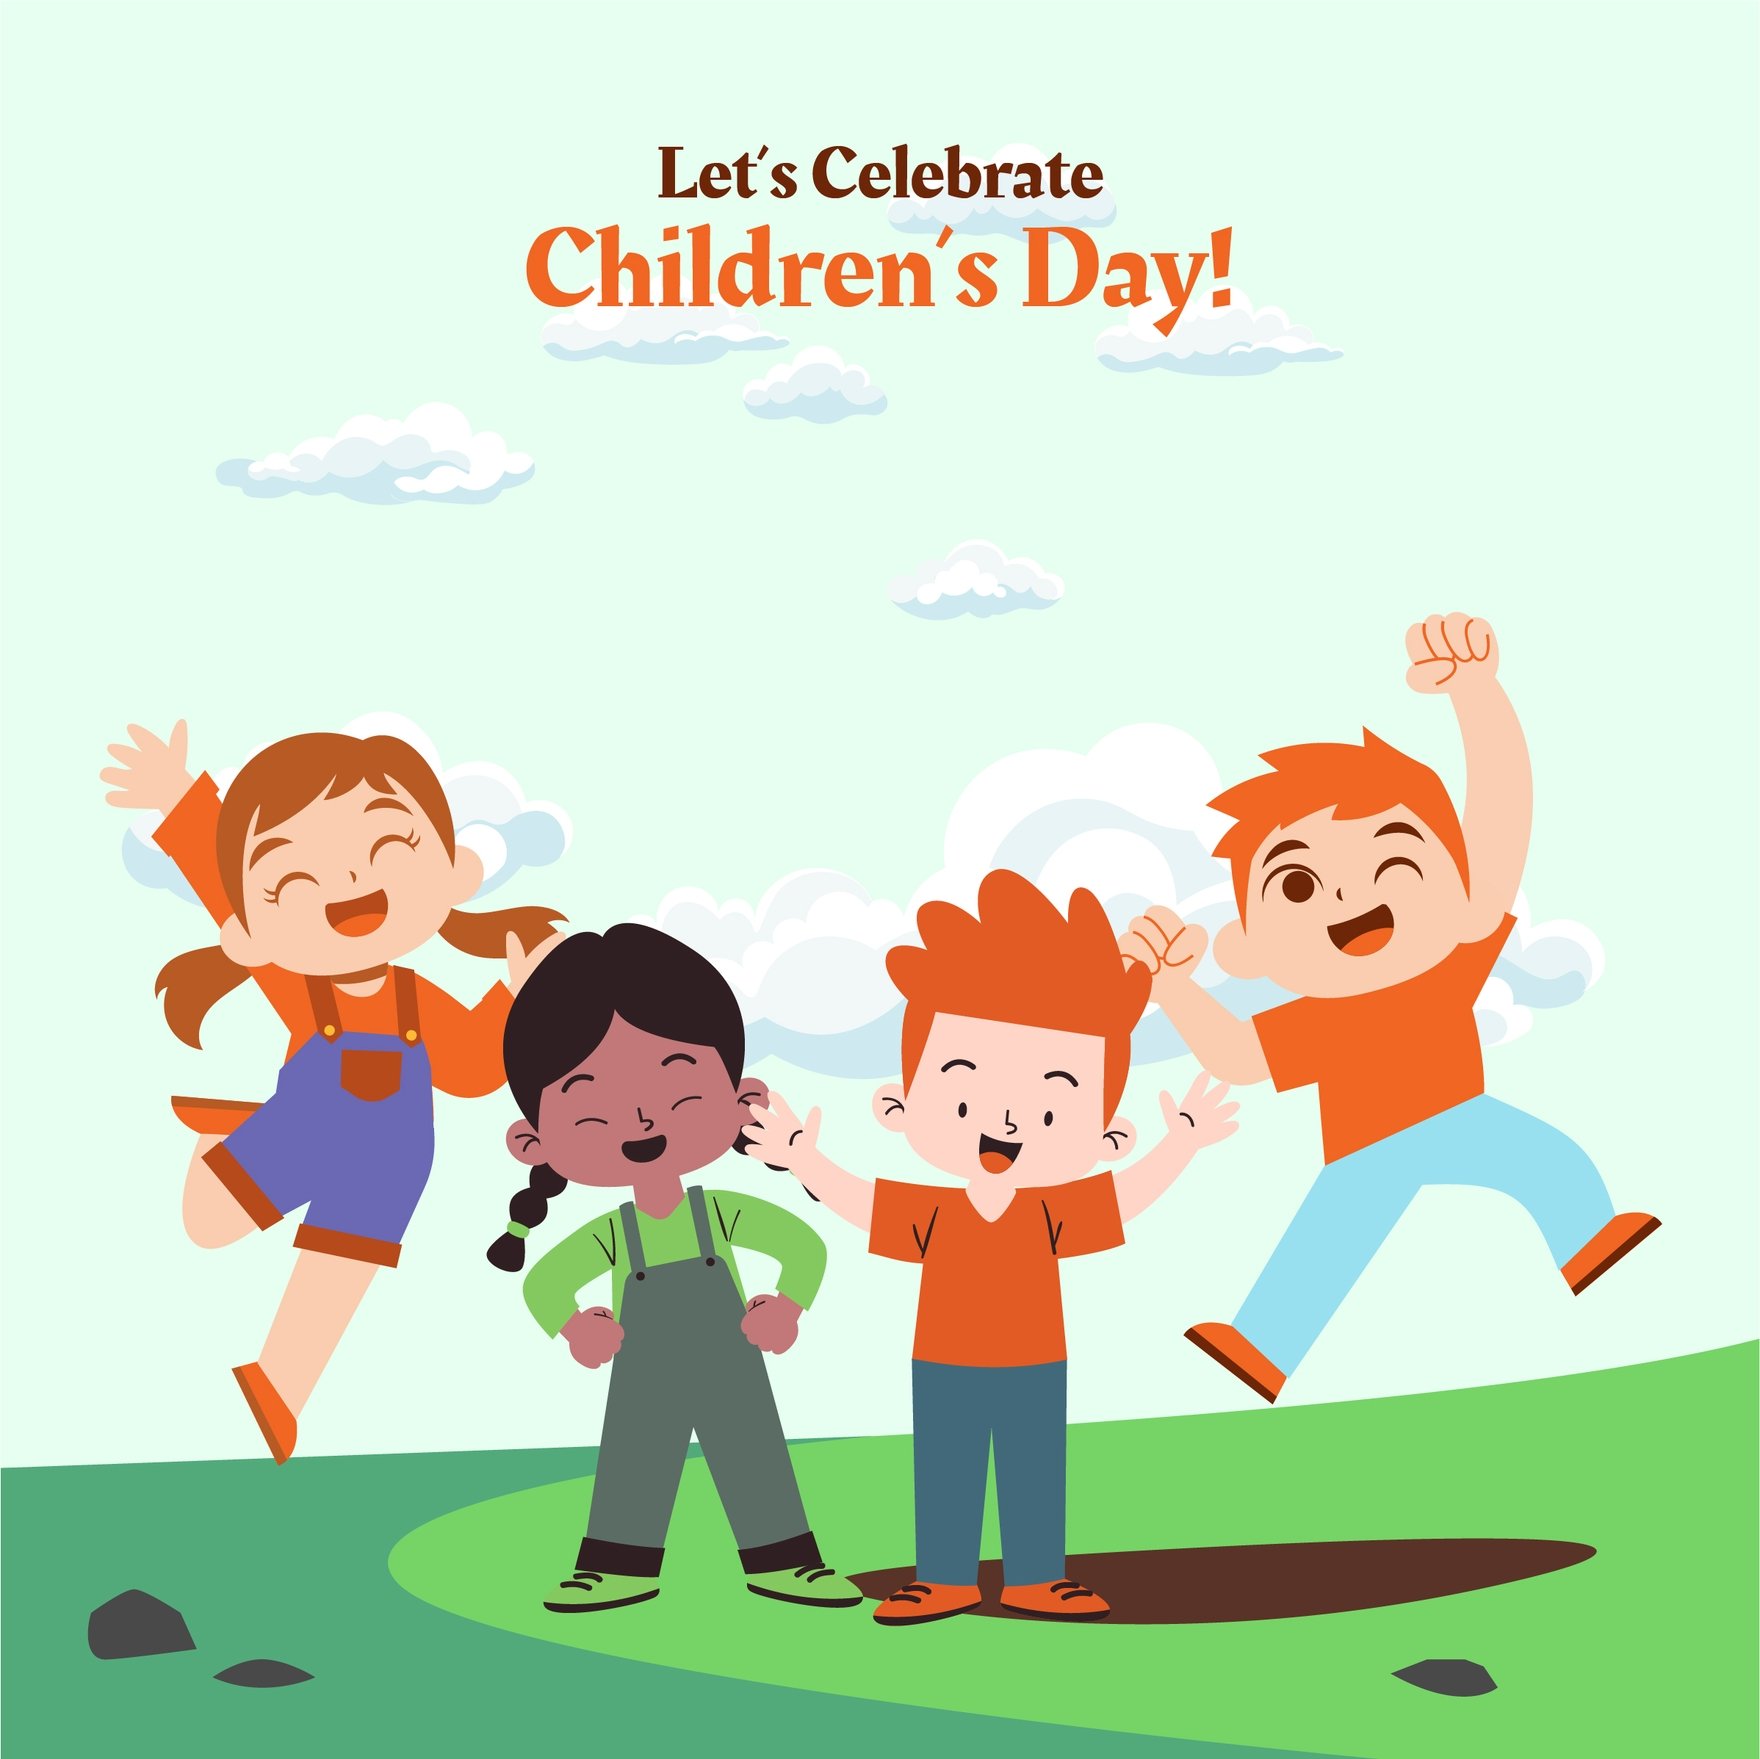 Free Children's Day Celebration Vector in Illustrator, PSD, EPS, SVG, JPG, PNG